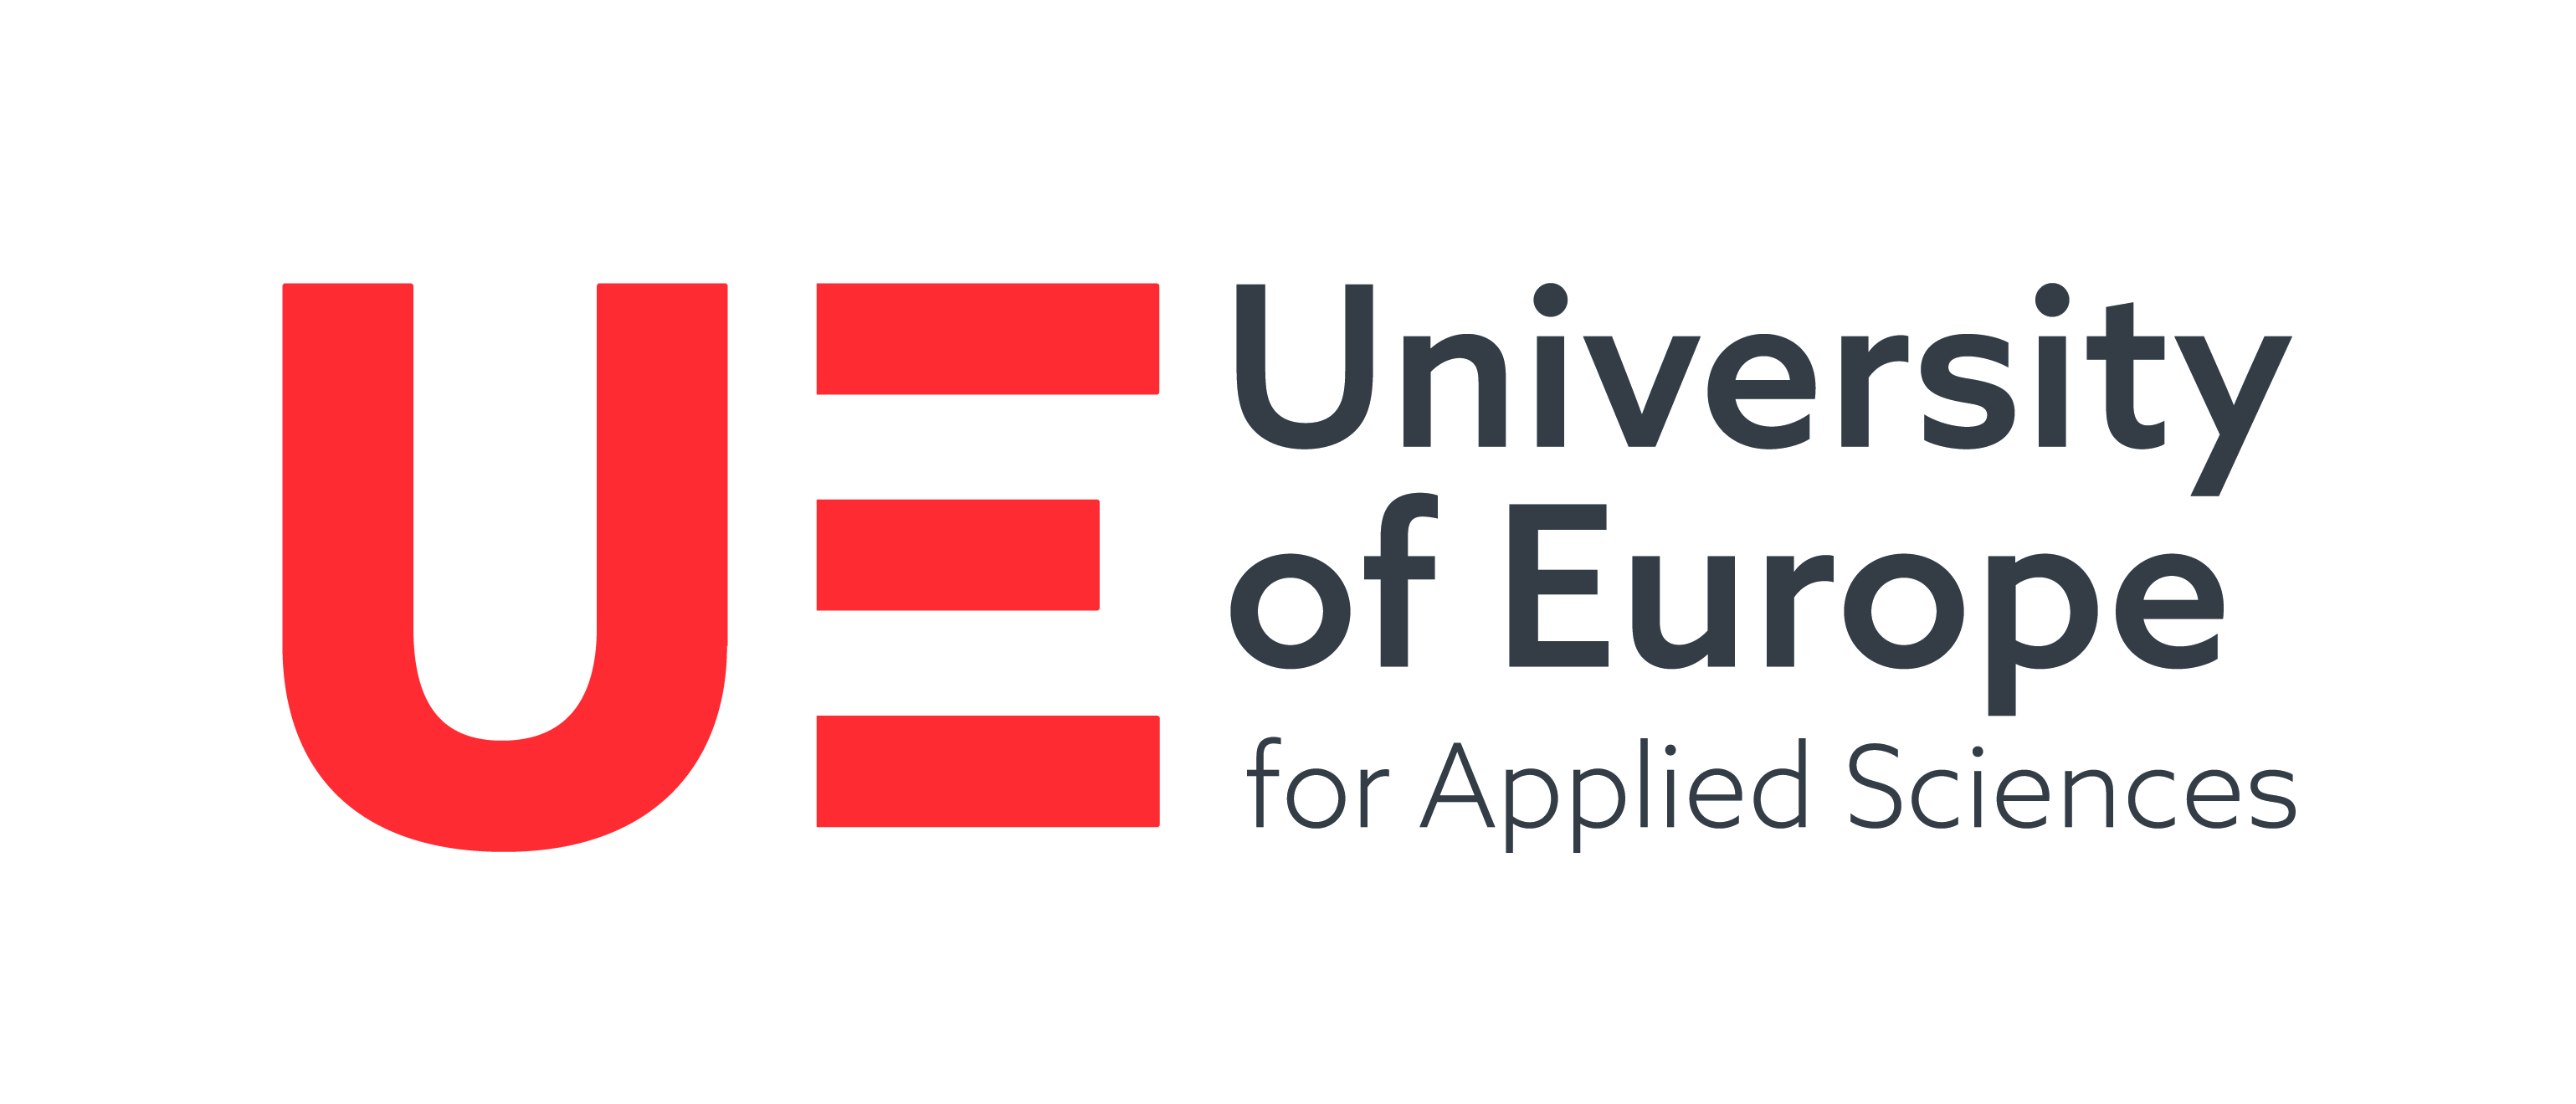 UE - University of Europe of Applied Sciences